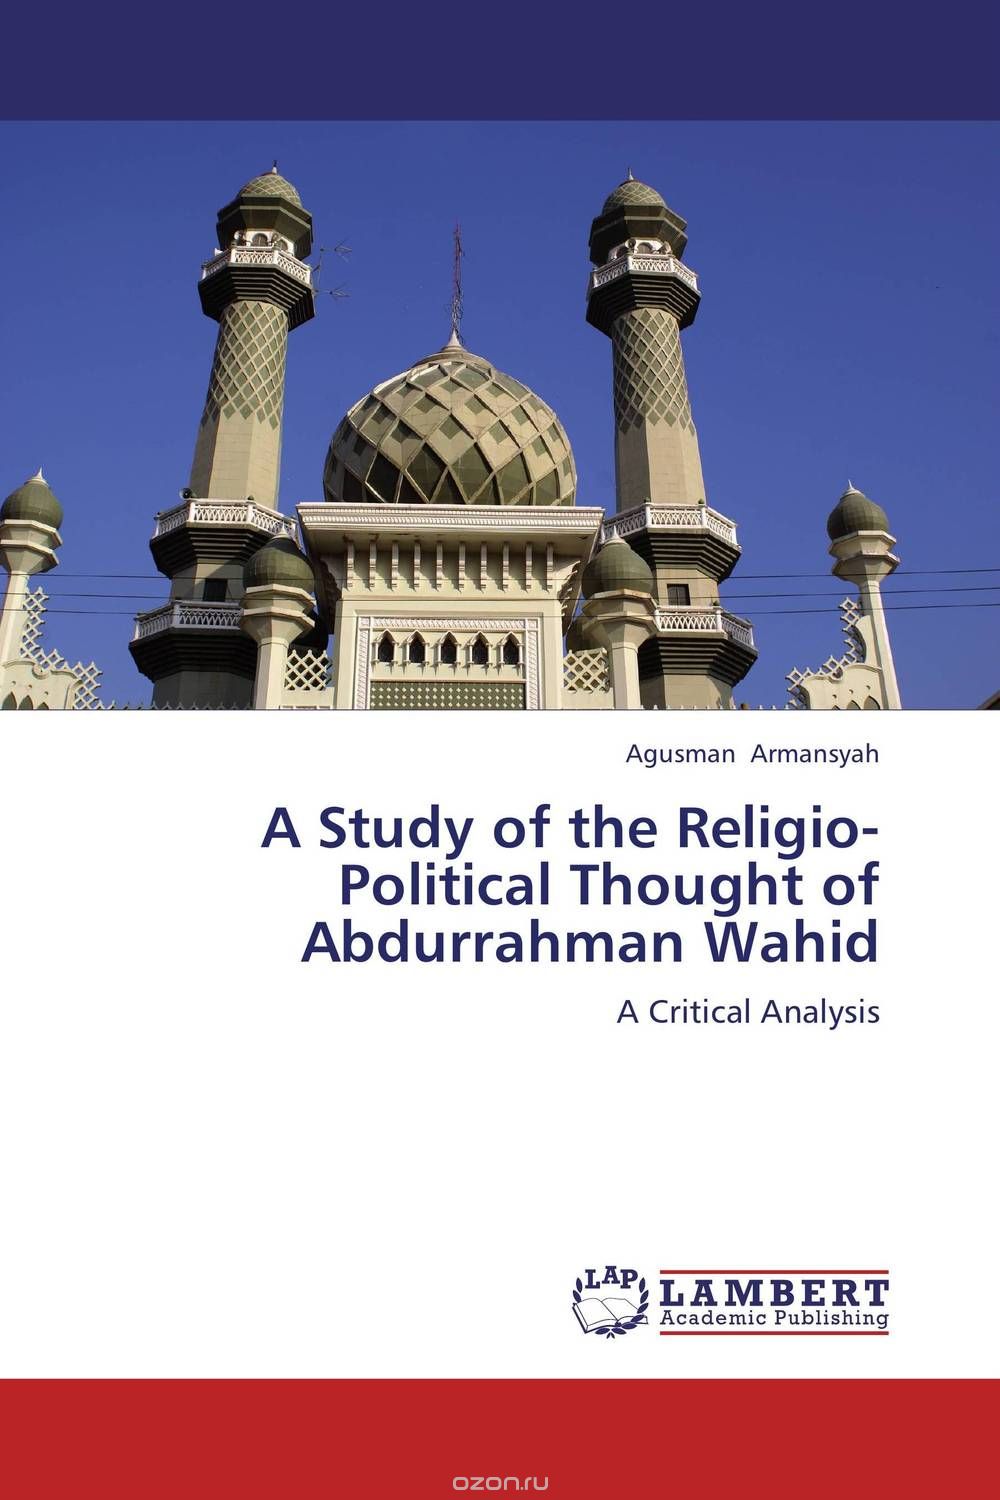 Скачать книгу "A Study of the Religio-Political Thought of Abdurrahman Wahid"